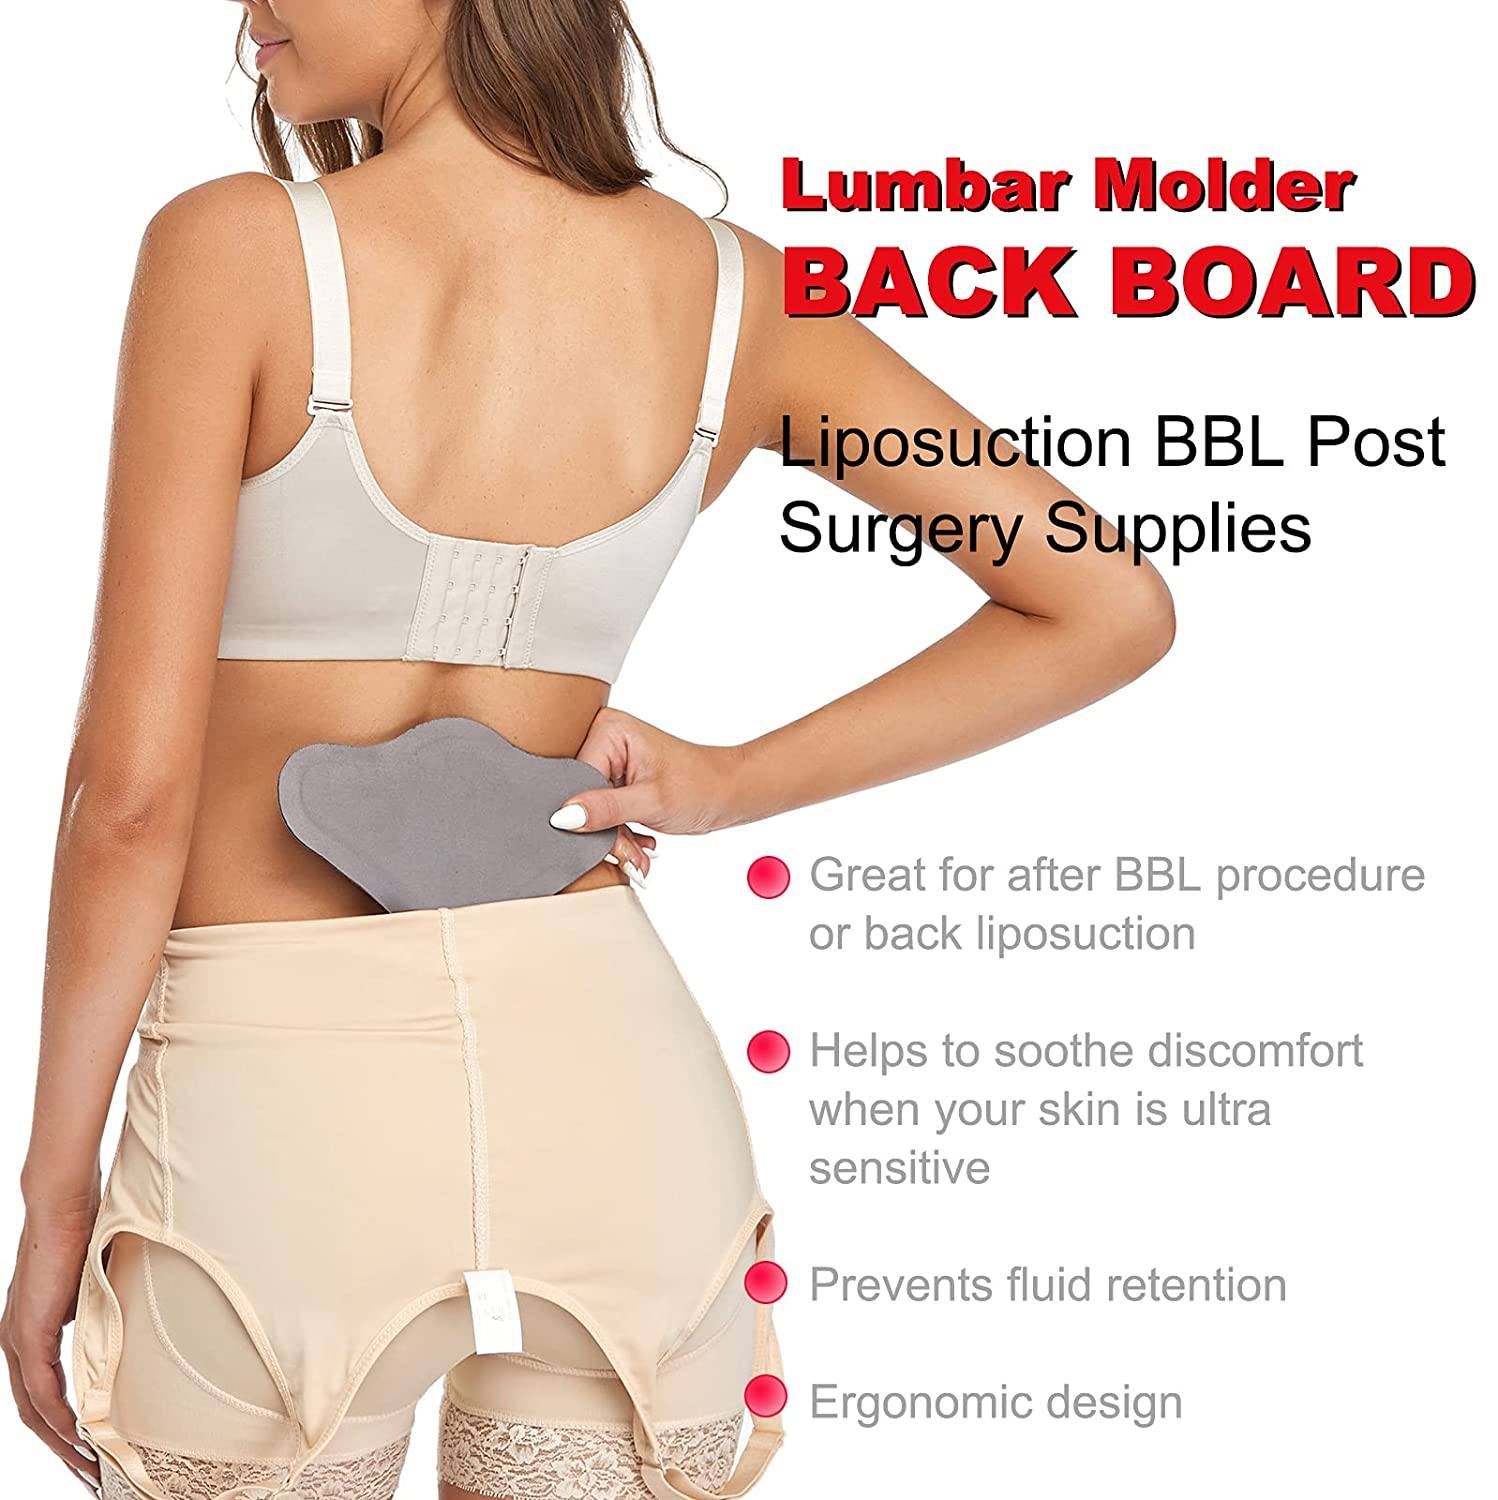 Foam Lumbar Molder Back Compression Board, Back Board Post Surgery